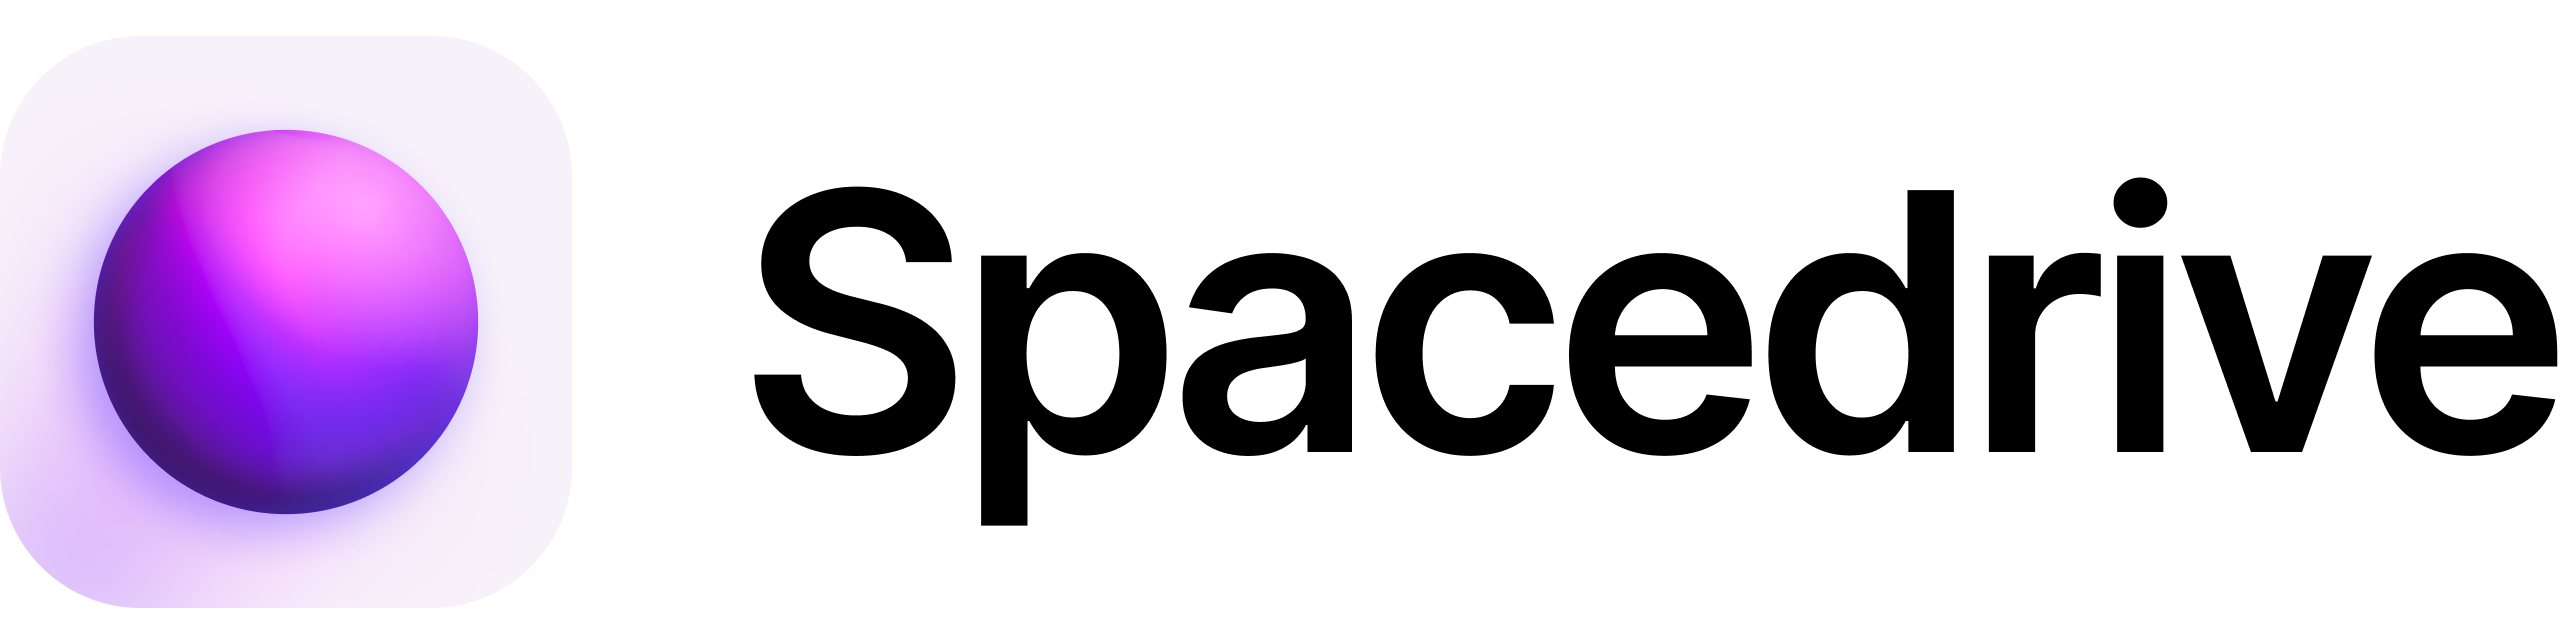 Spacedrive Logo